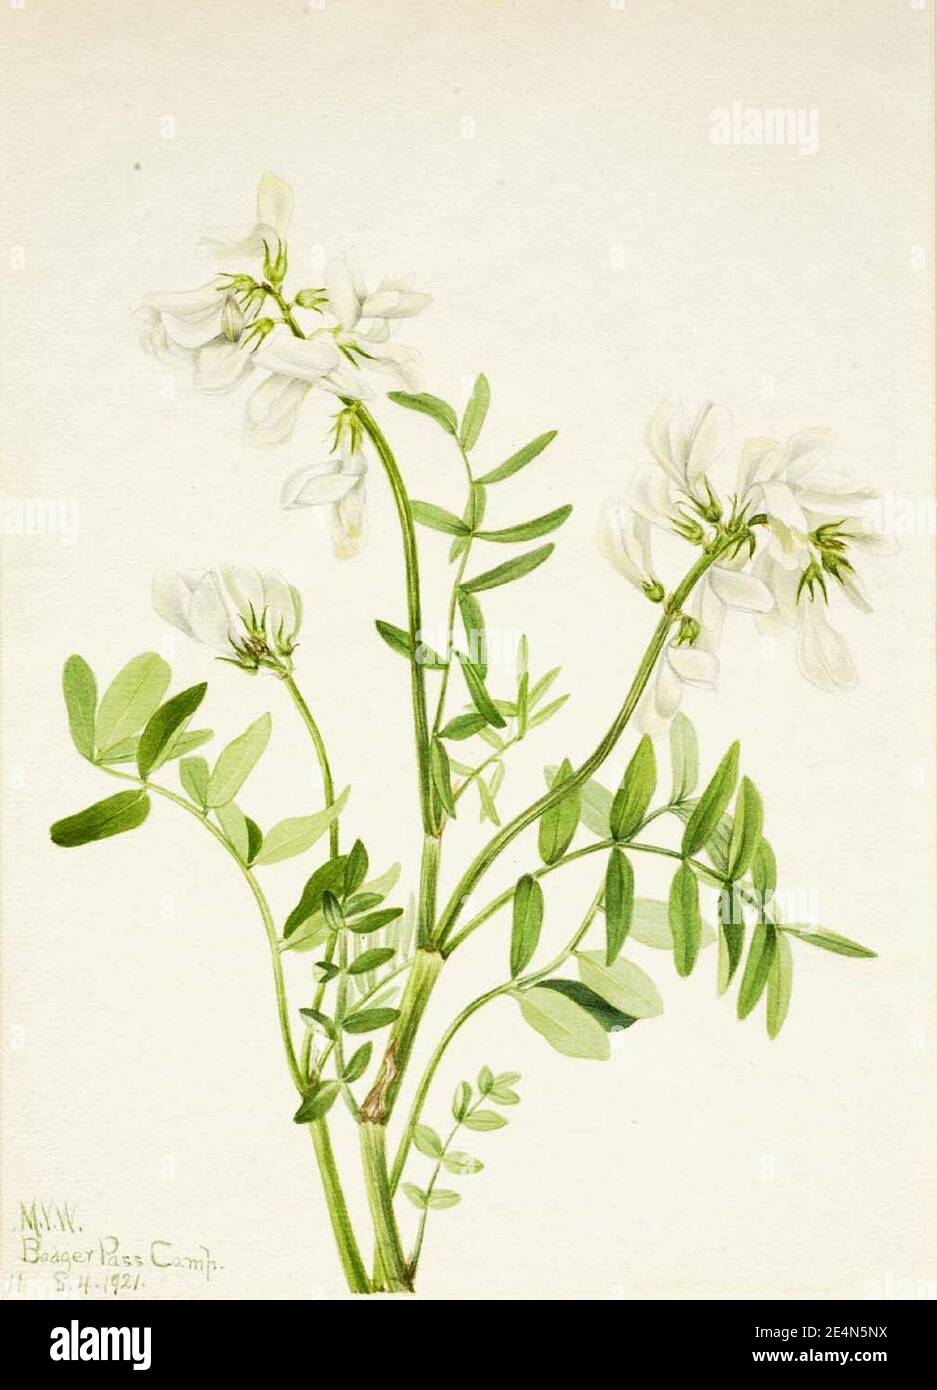 Mary Vaux Walcott - Sweetvetch (Hedysarum mackenzii) Stock Photo